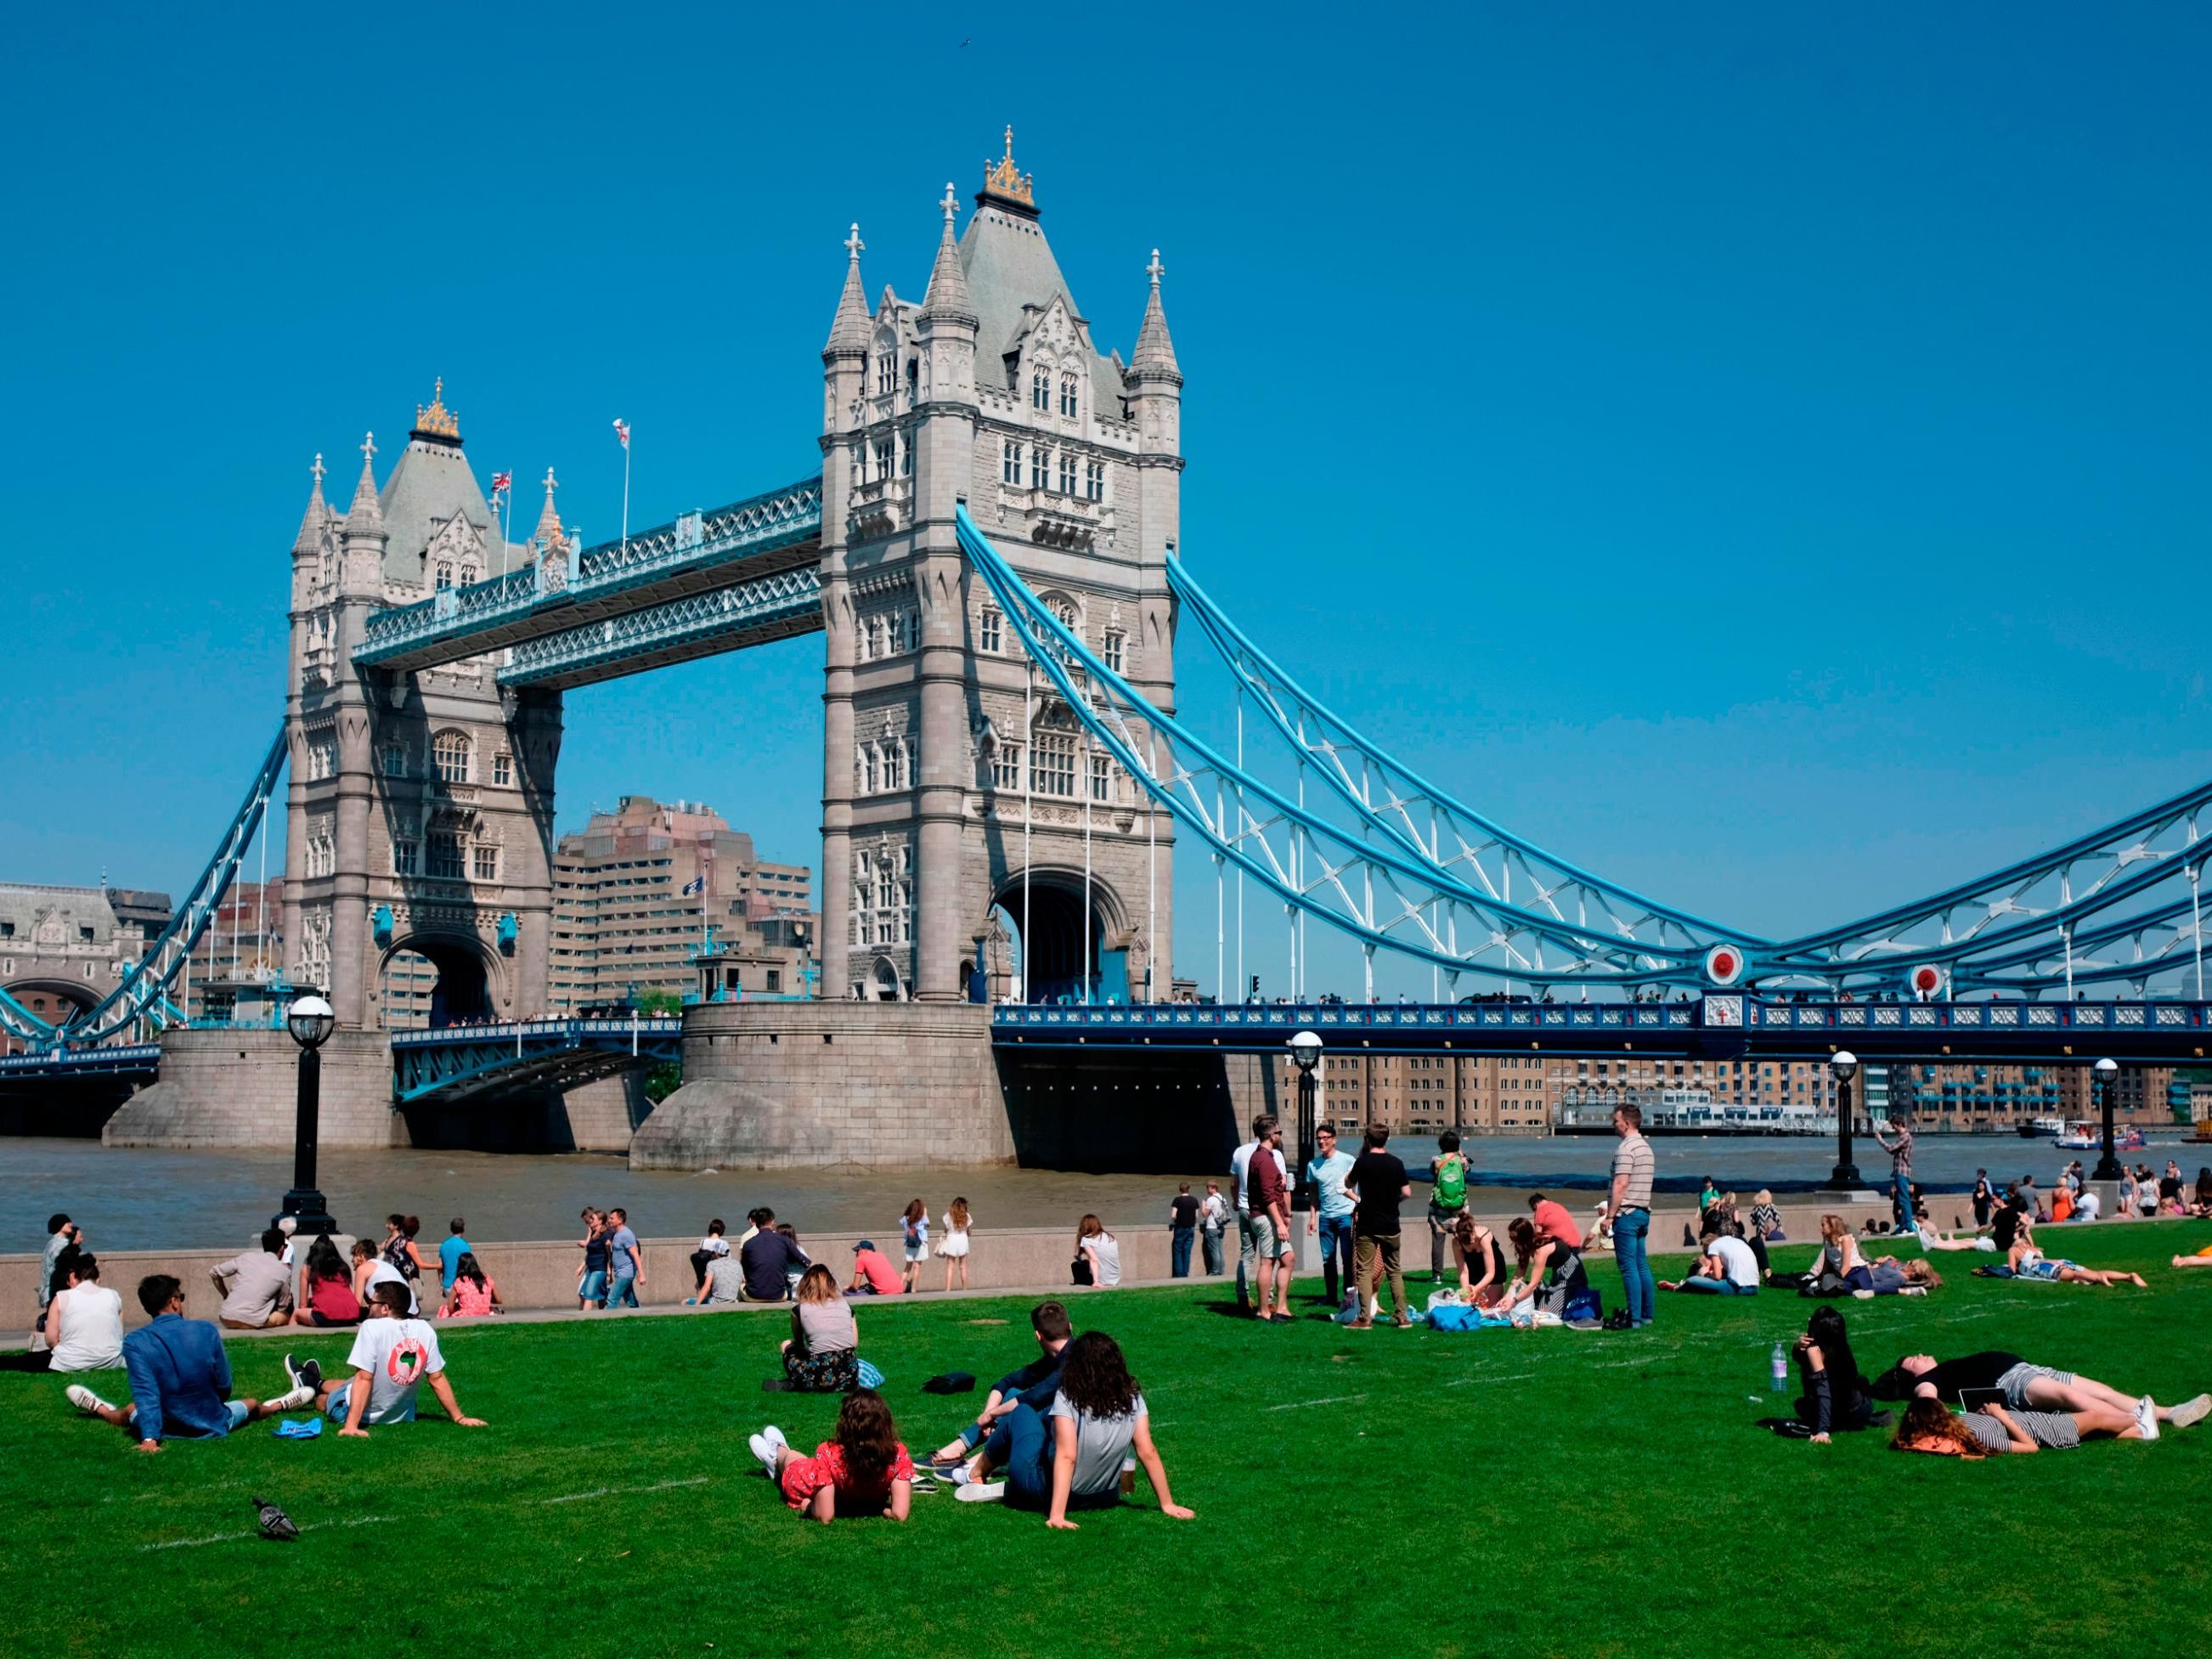 The secrets of London's bridges span the centuries | CNN